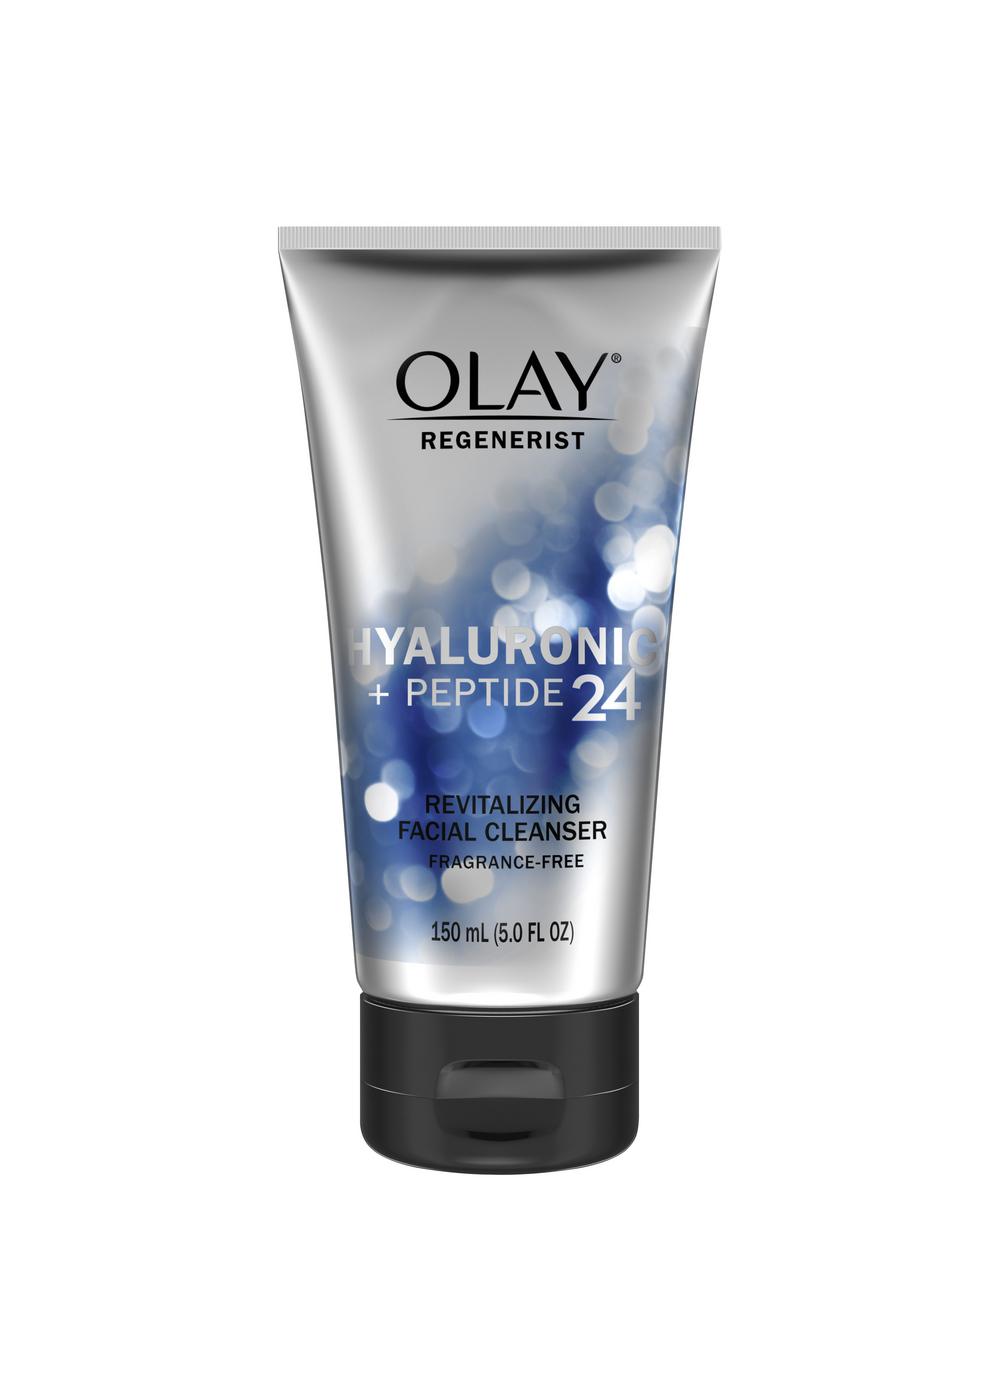 Olay Regenerist Hyaluronic + Peptide 24 Revitalizing Facial Cleanser; image 1 of 2